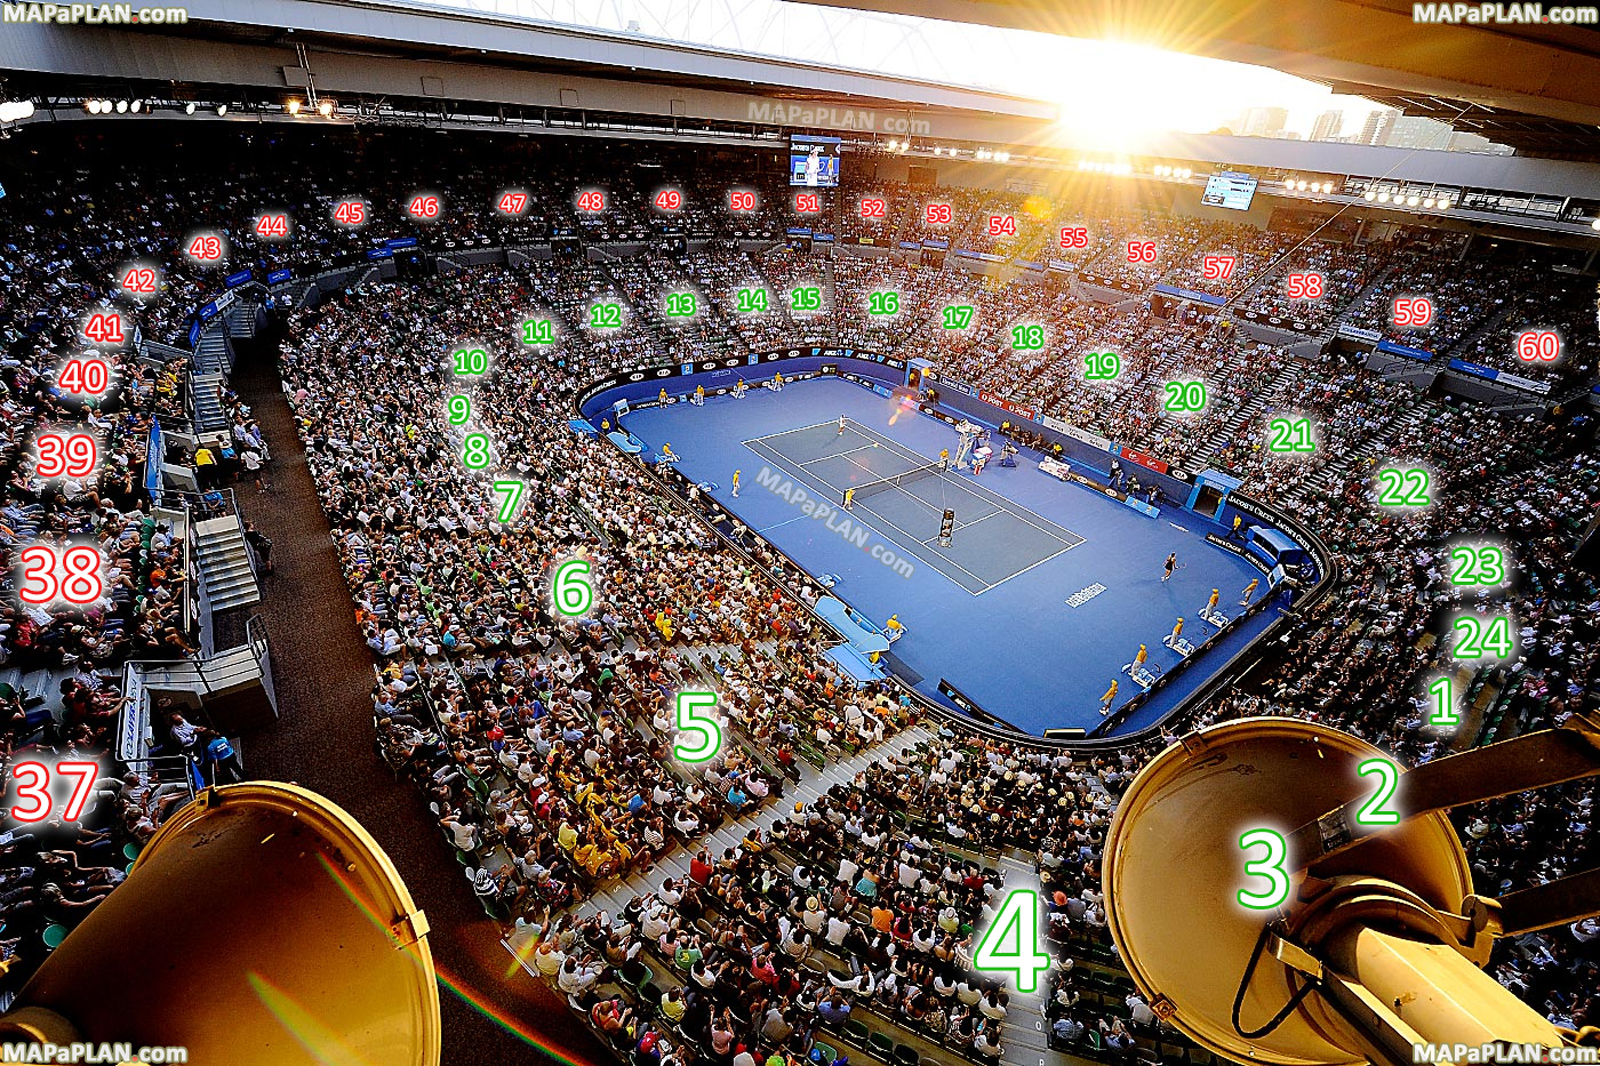 Melbourne Rod Laver Arena Australian Open tennis court Corporate